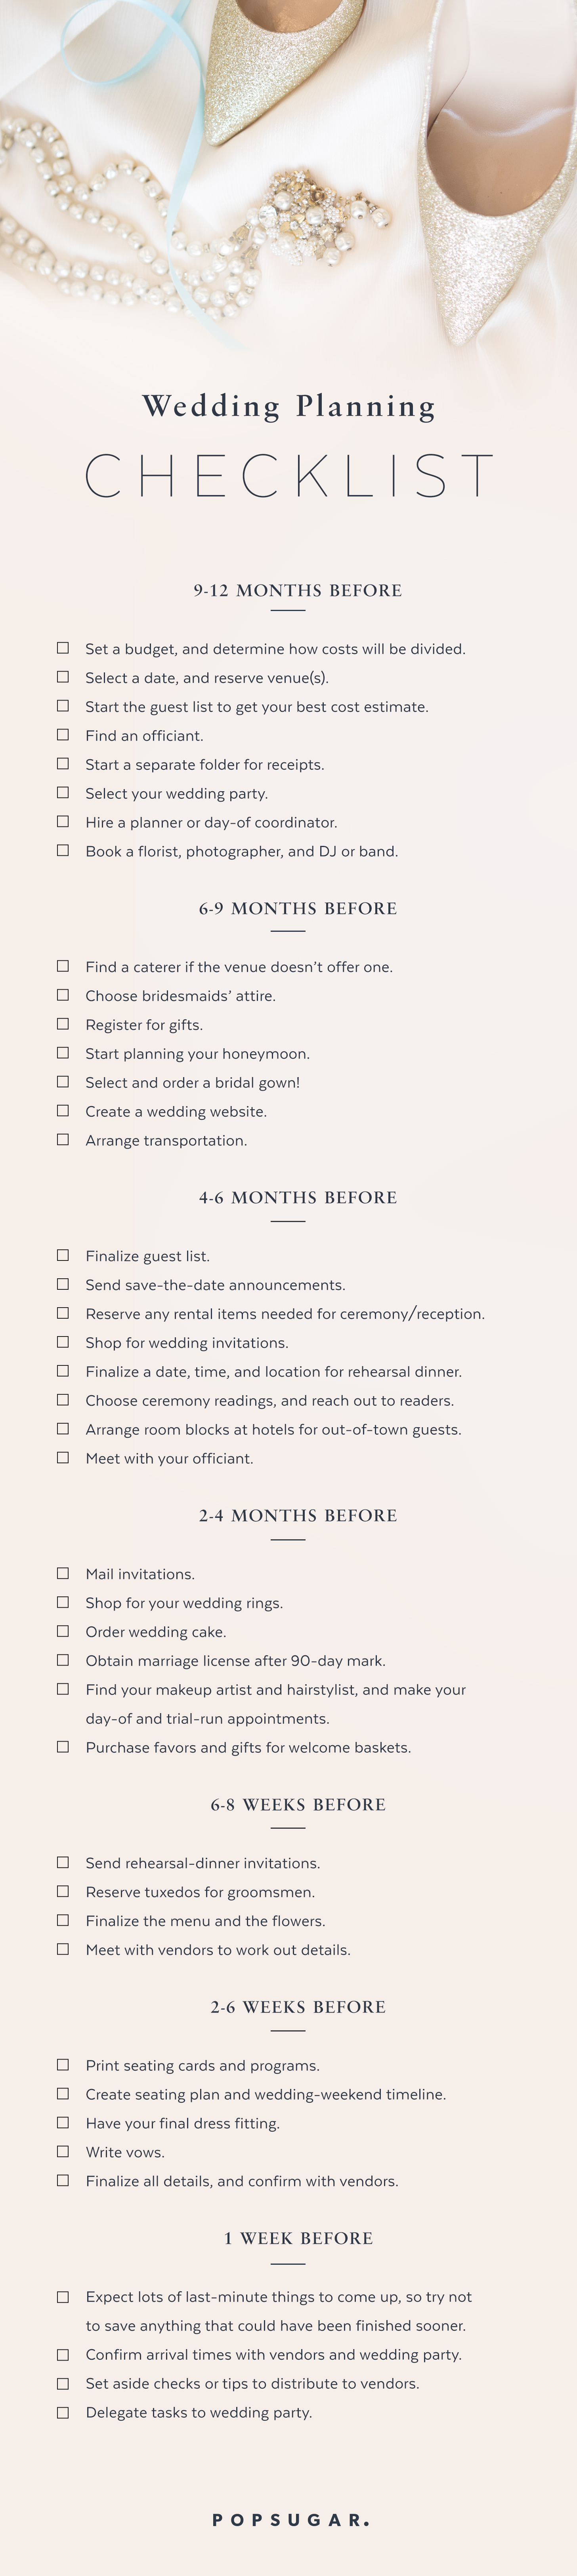 wedding-planning-checklist-popsugar-smart-living